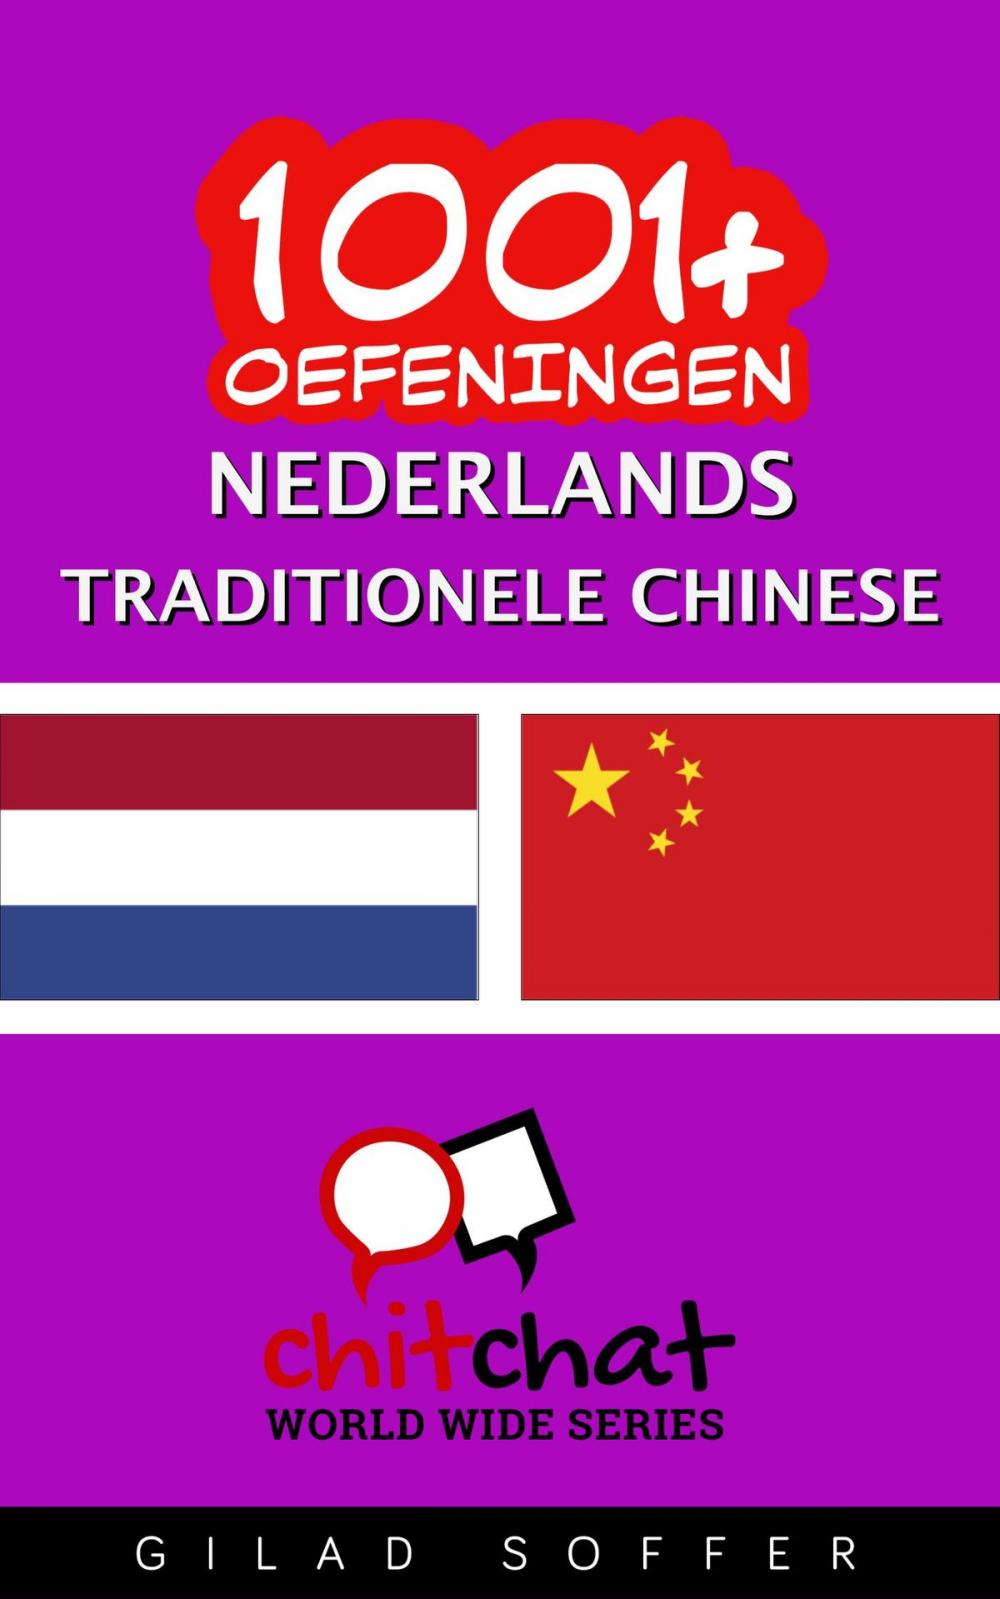 Big bigCover of 1001+ oefeningen nederlands - traditionele chinese